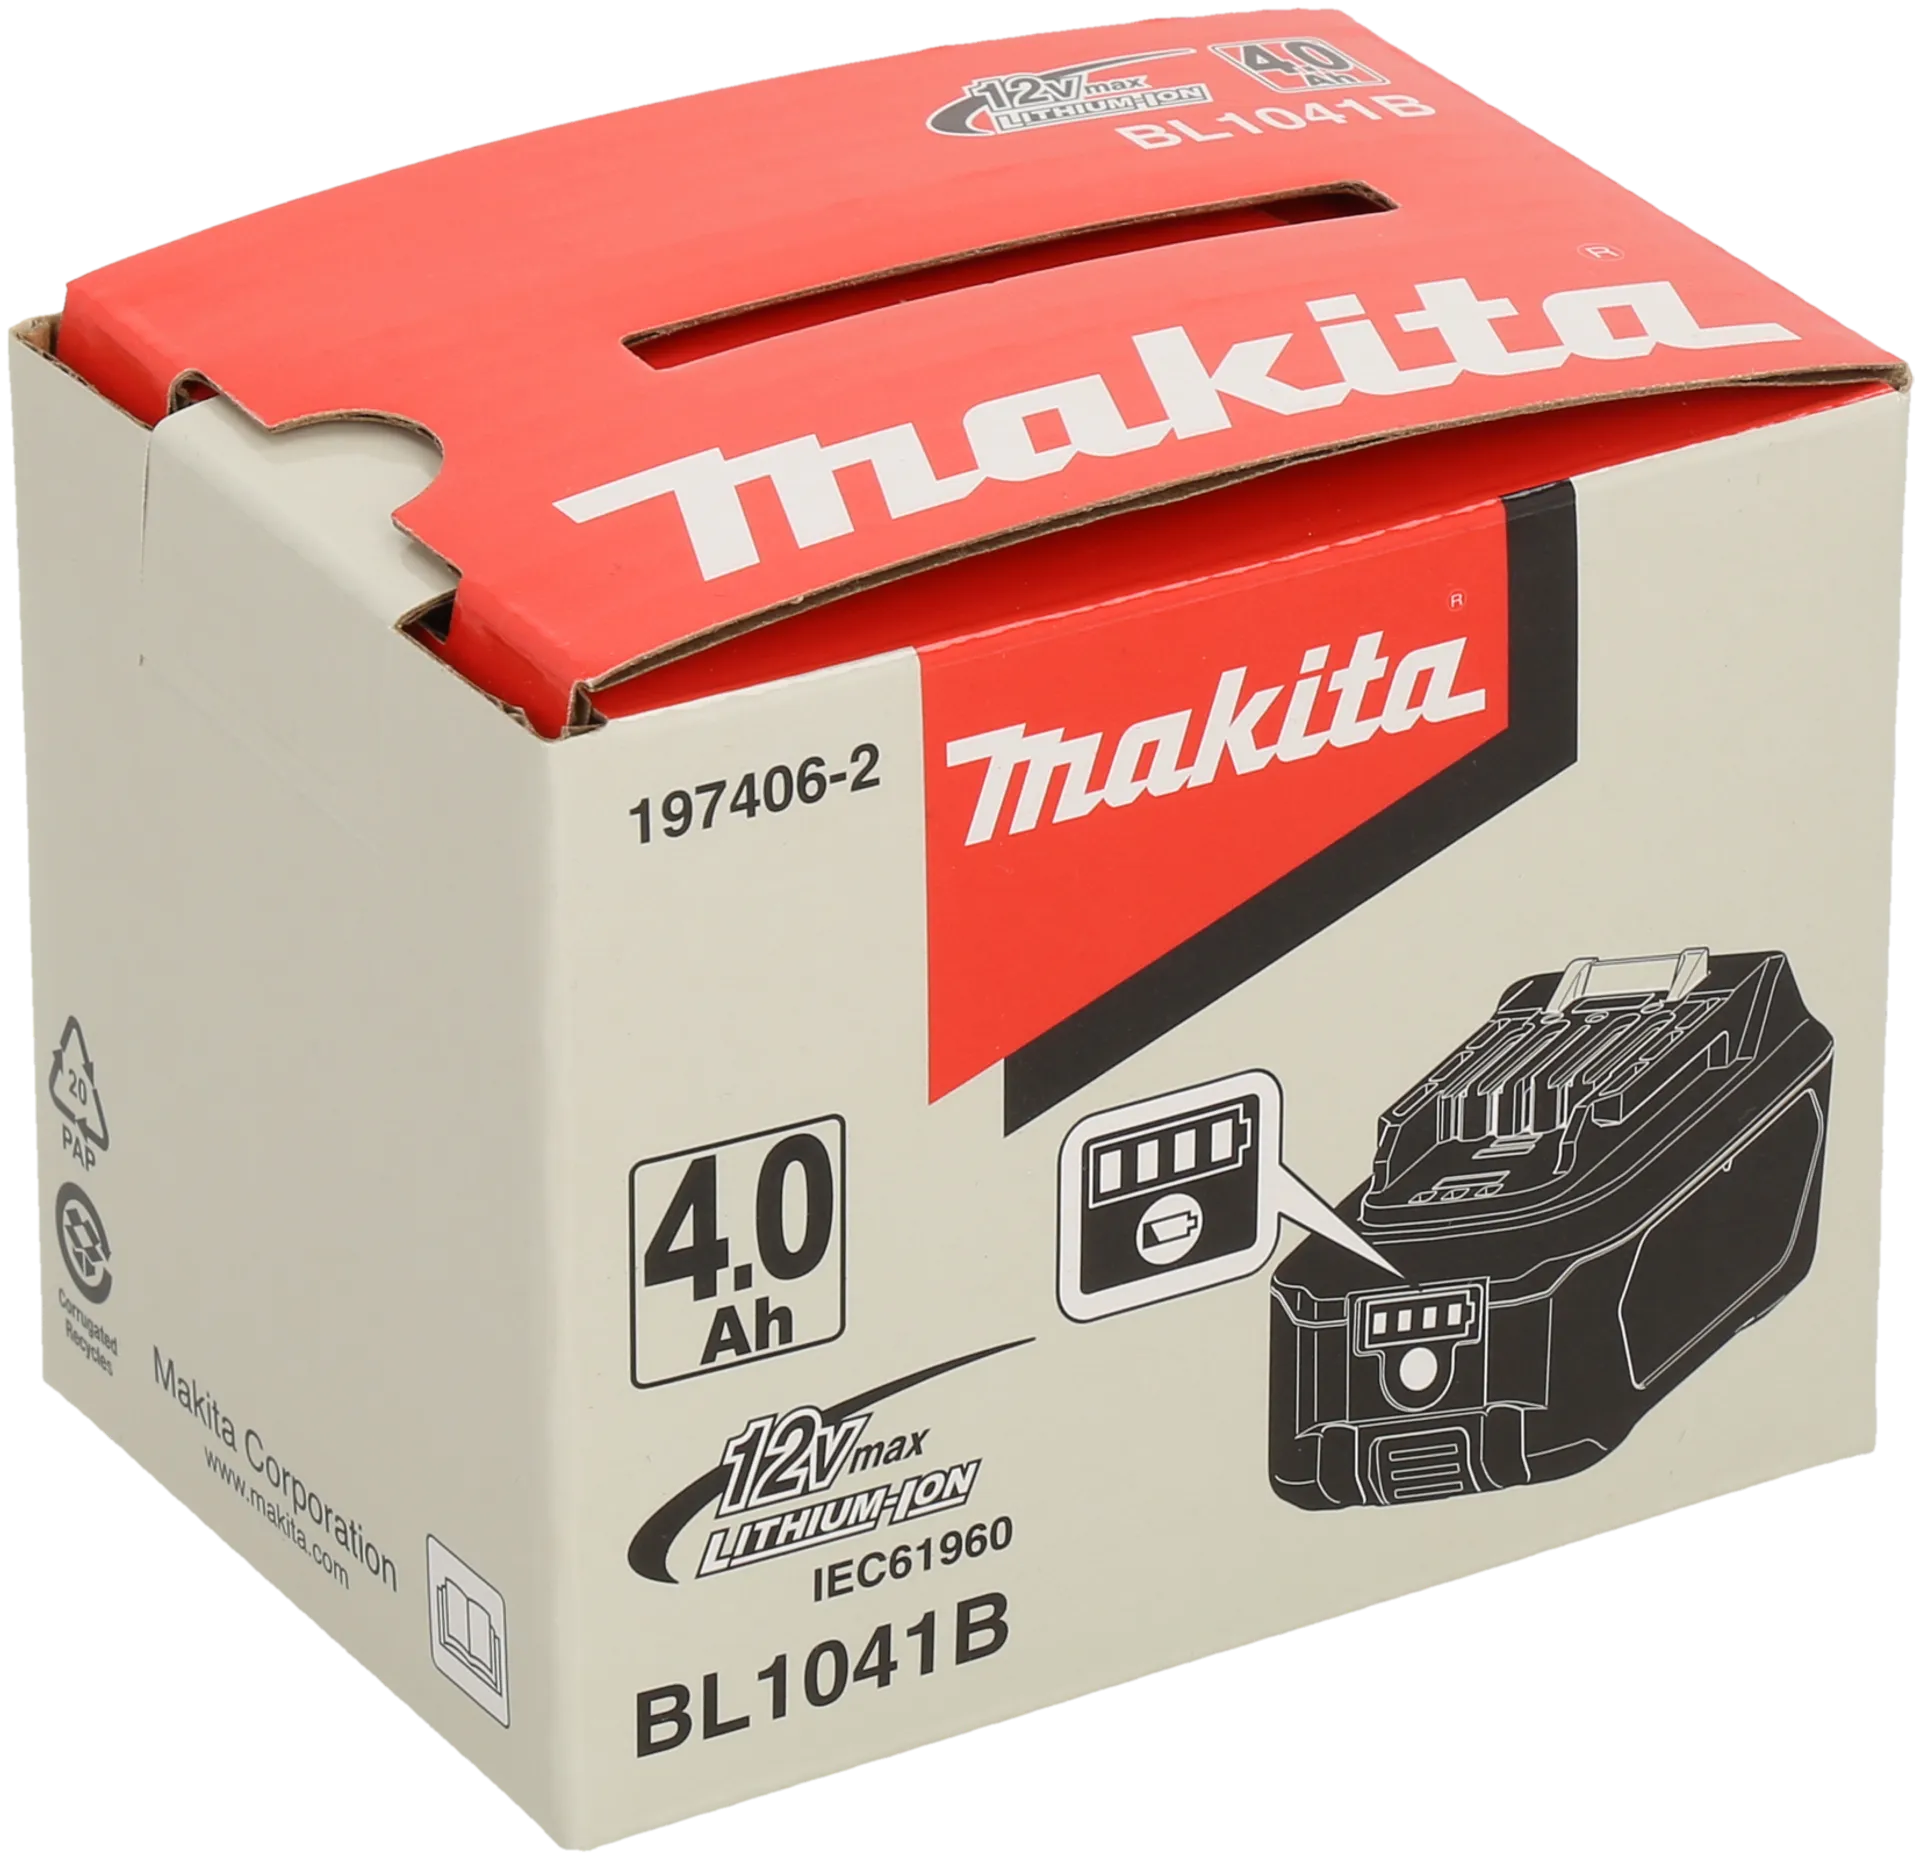 Akku Makita BL1041B 10,8V 197406-2 kapasiteetti 4,0Ah - 2